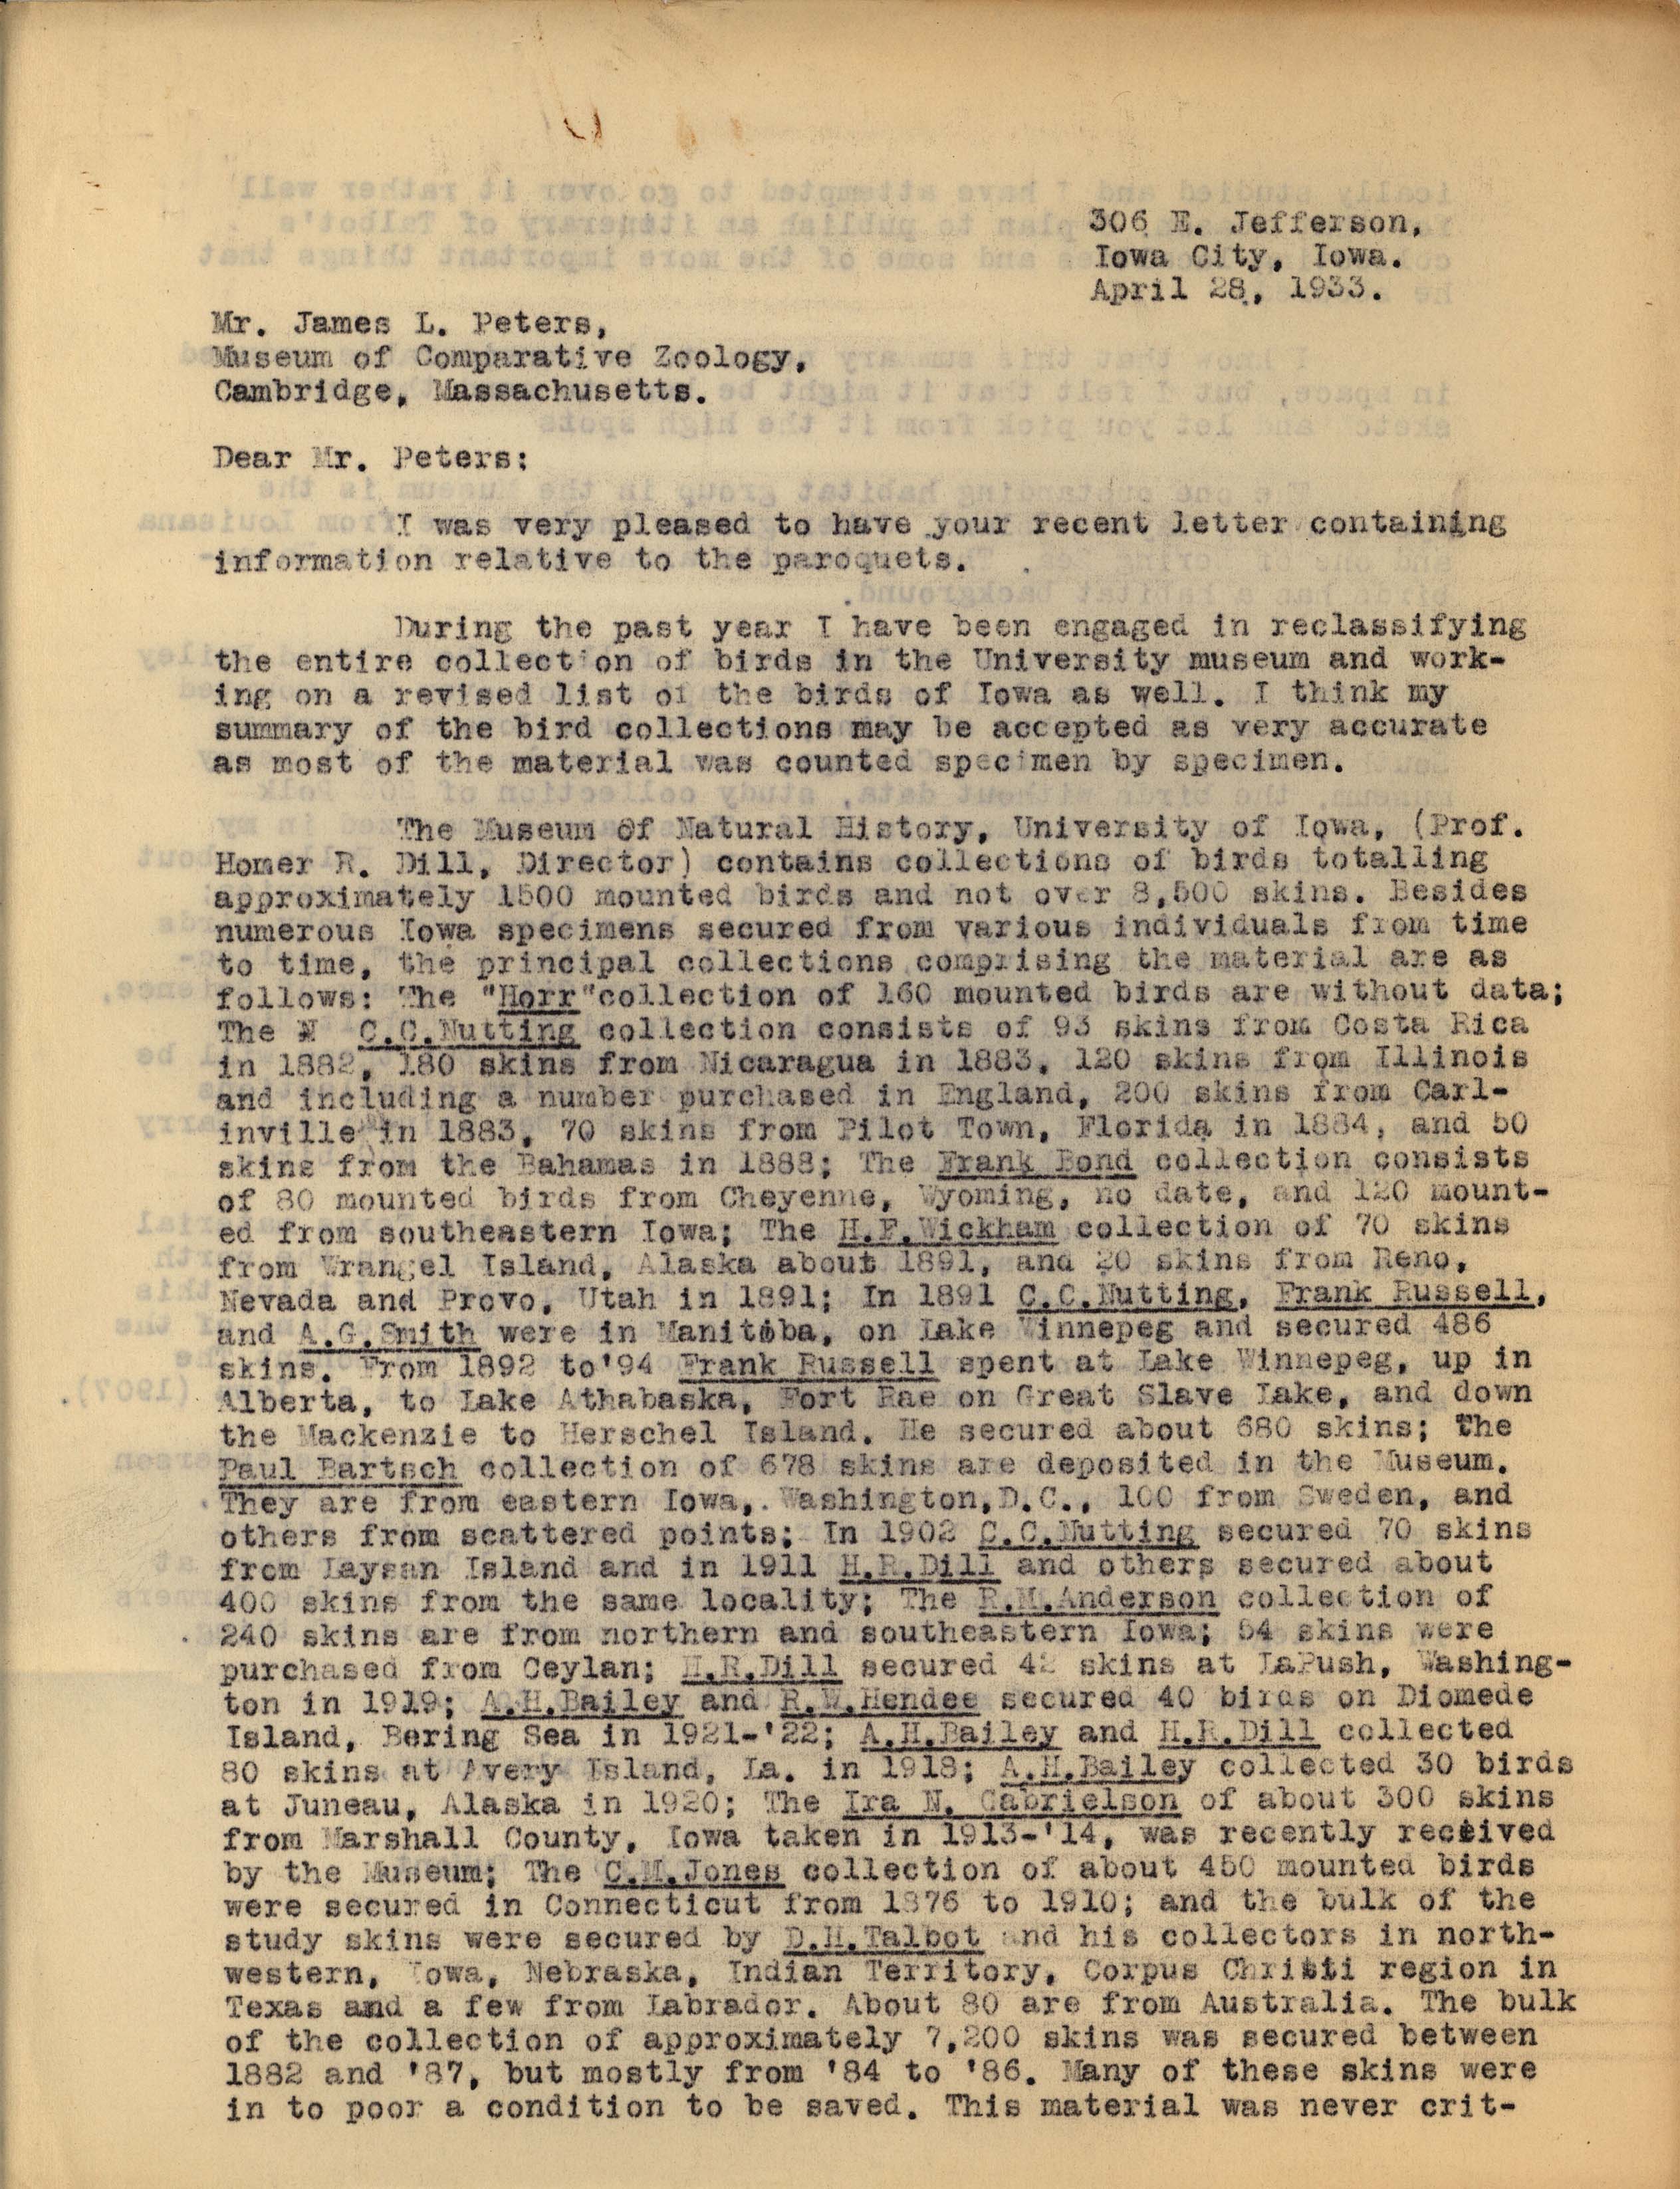 Philip DuMont letter to James Peters regarding bird collections, April 28, 1933